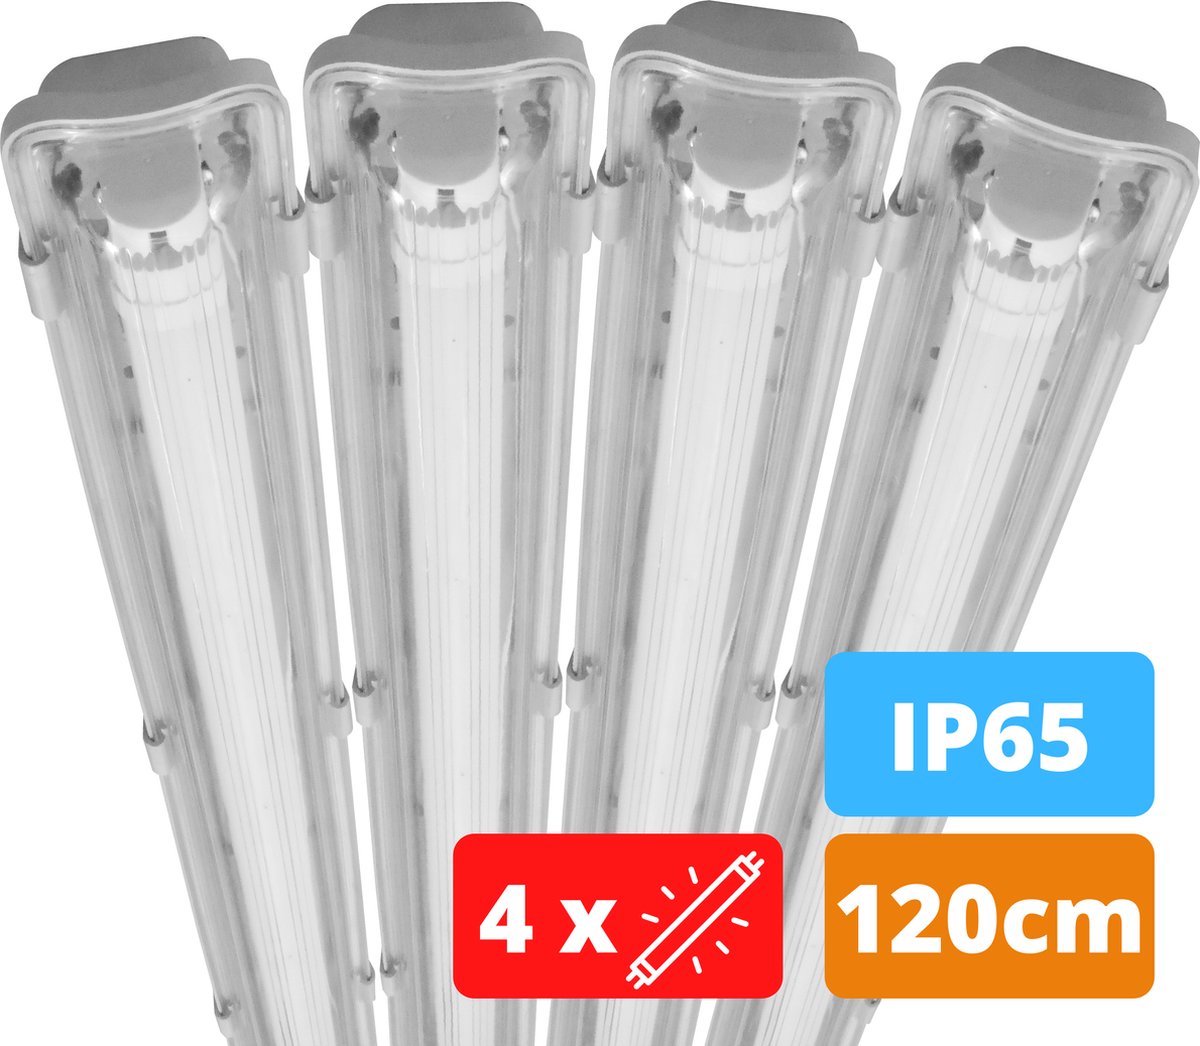 Proventa LED TL lampen met armatuur 120cm - IP65 - 4000K - 2160 lumen - 4 stuks - Merkloos